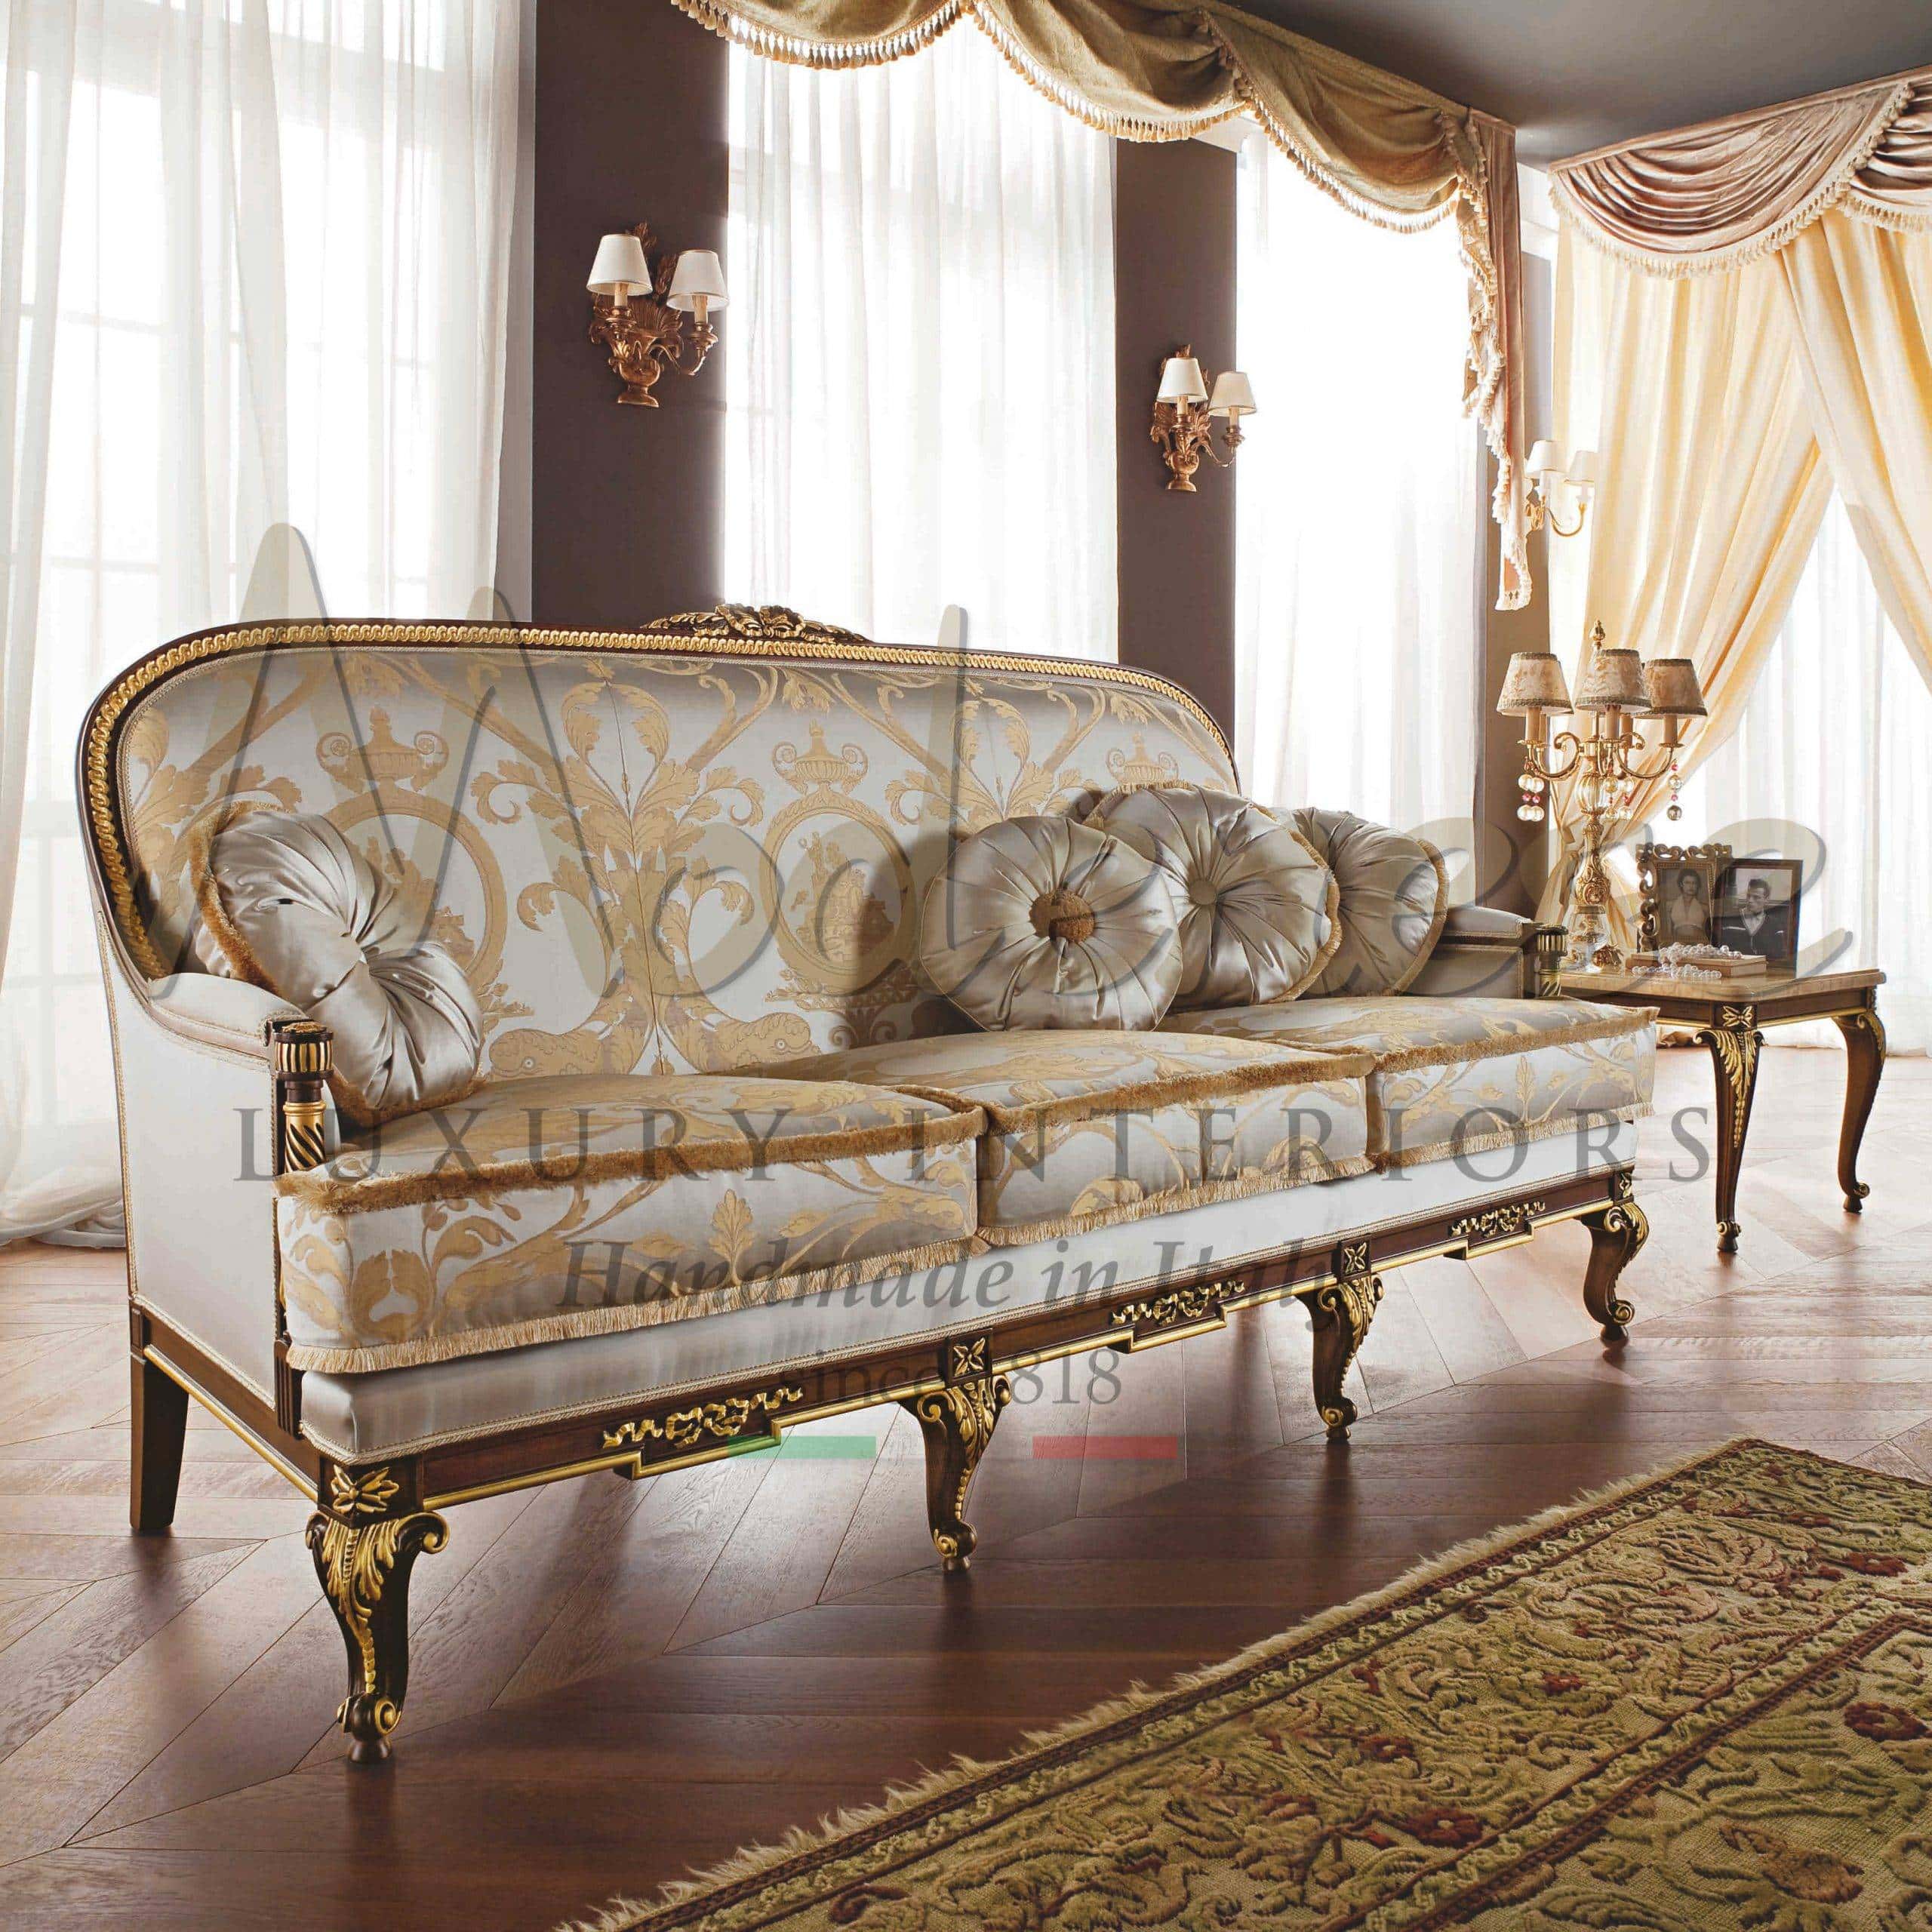 Luxury Italian Sofas Design 100, Leather Studded Sofa Set Costa Rica